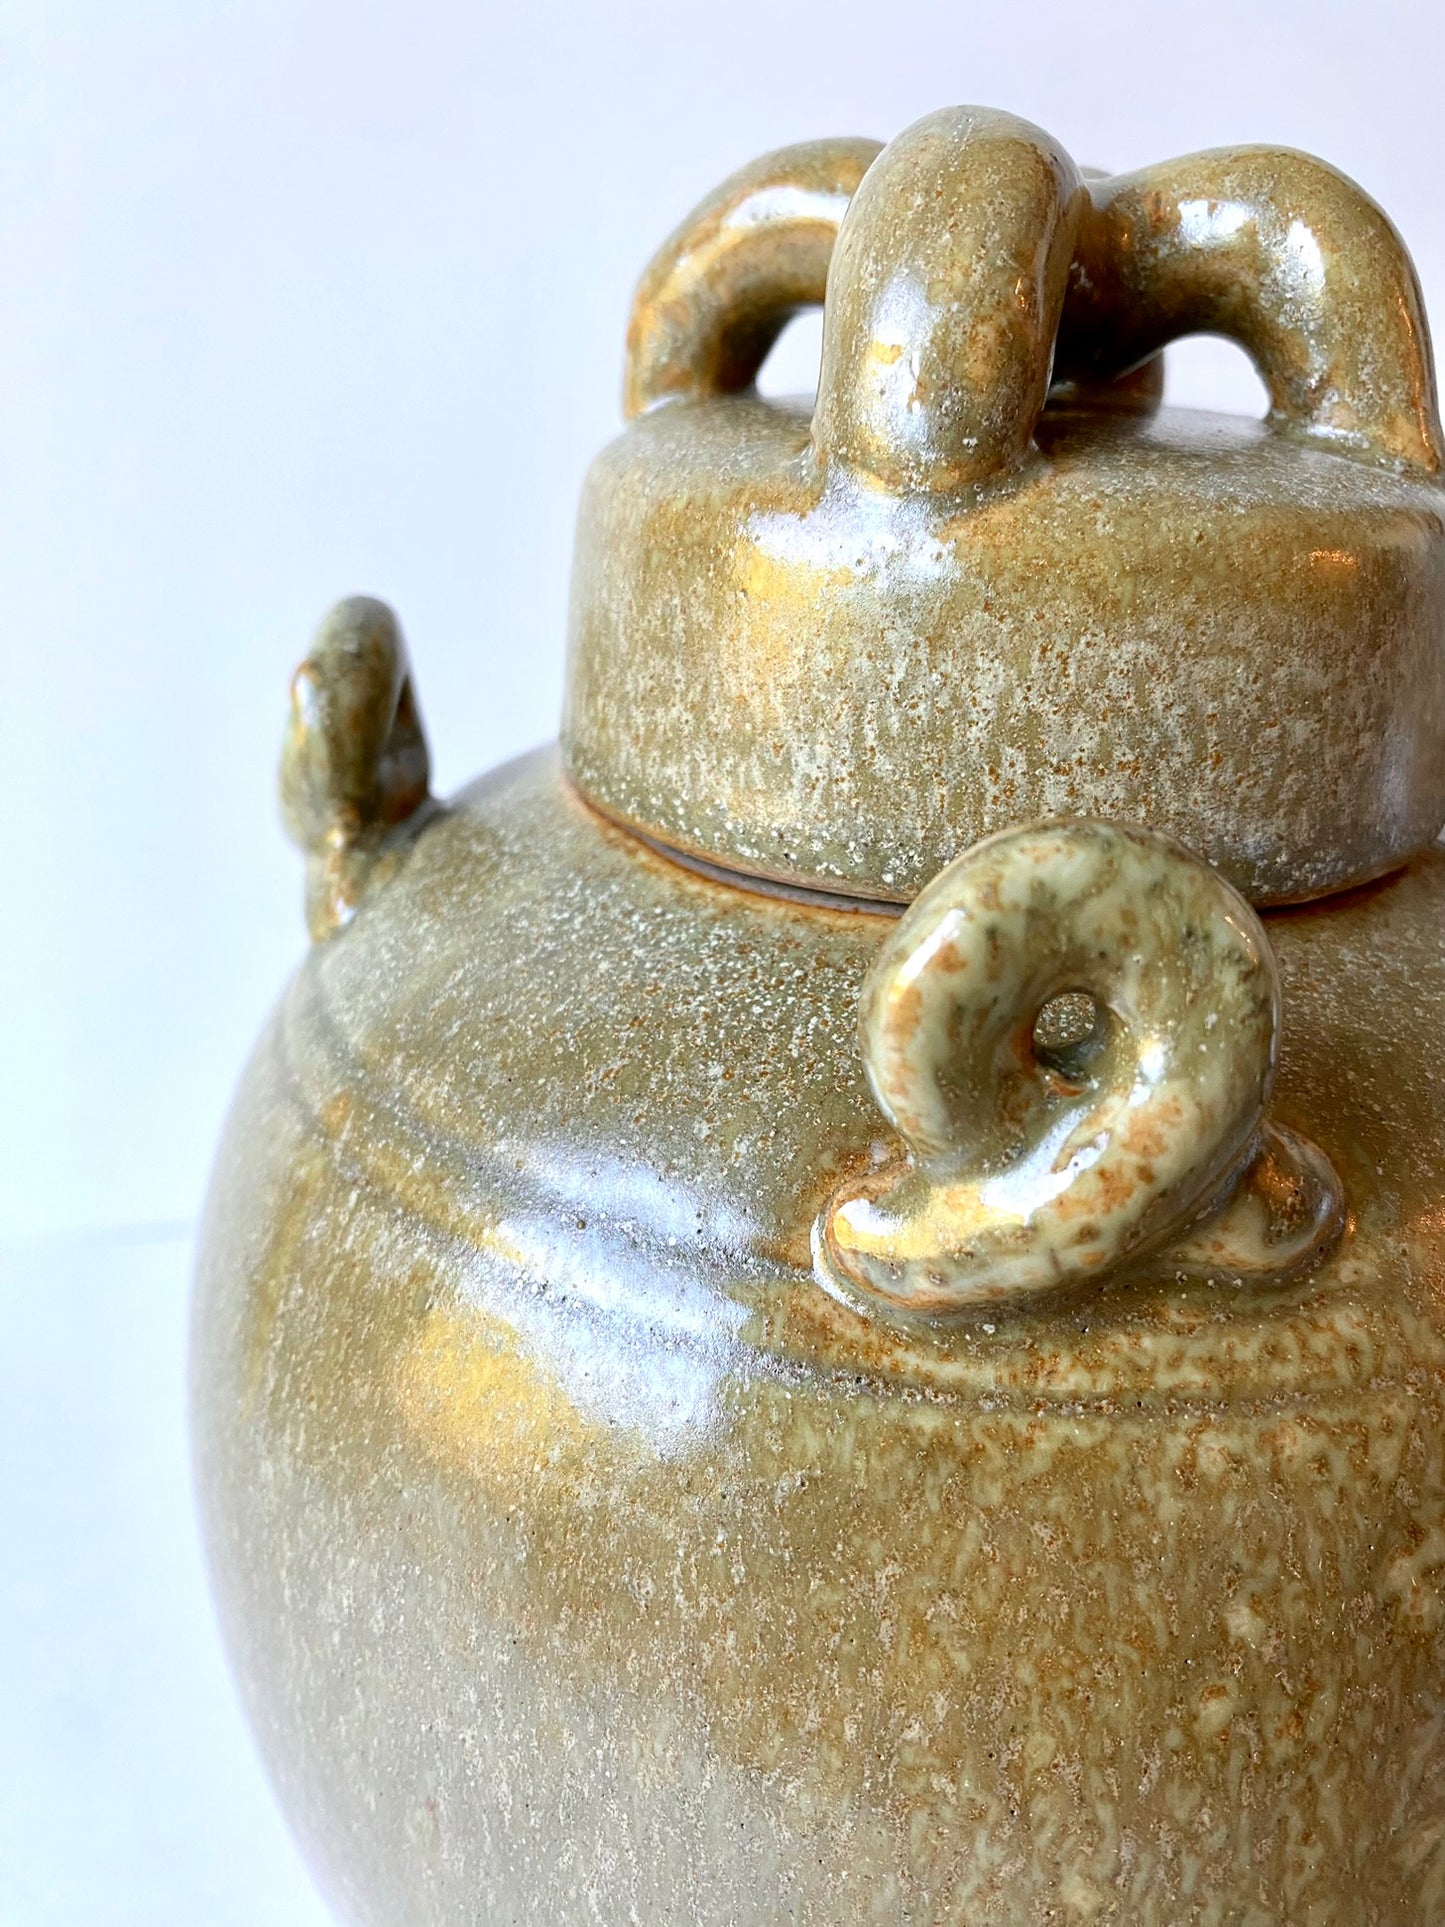 stoneware vase with lid